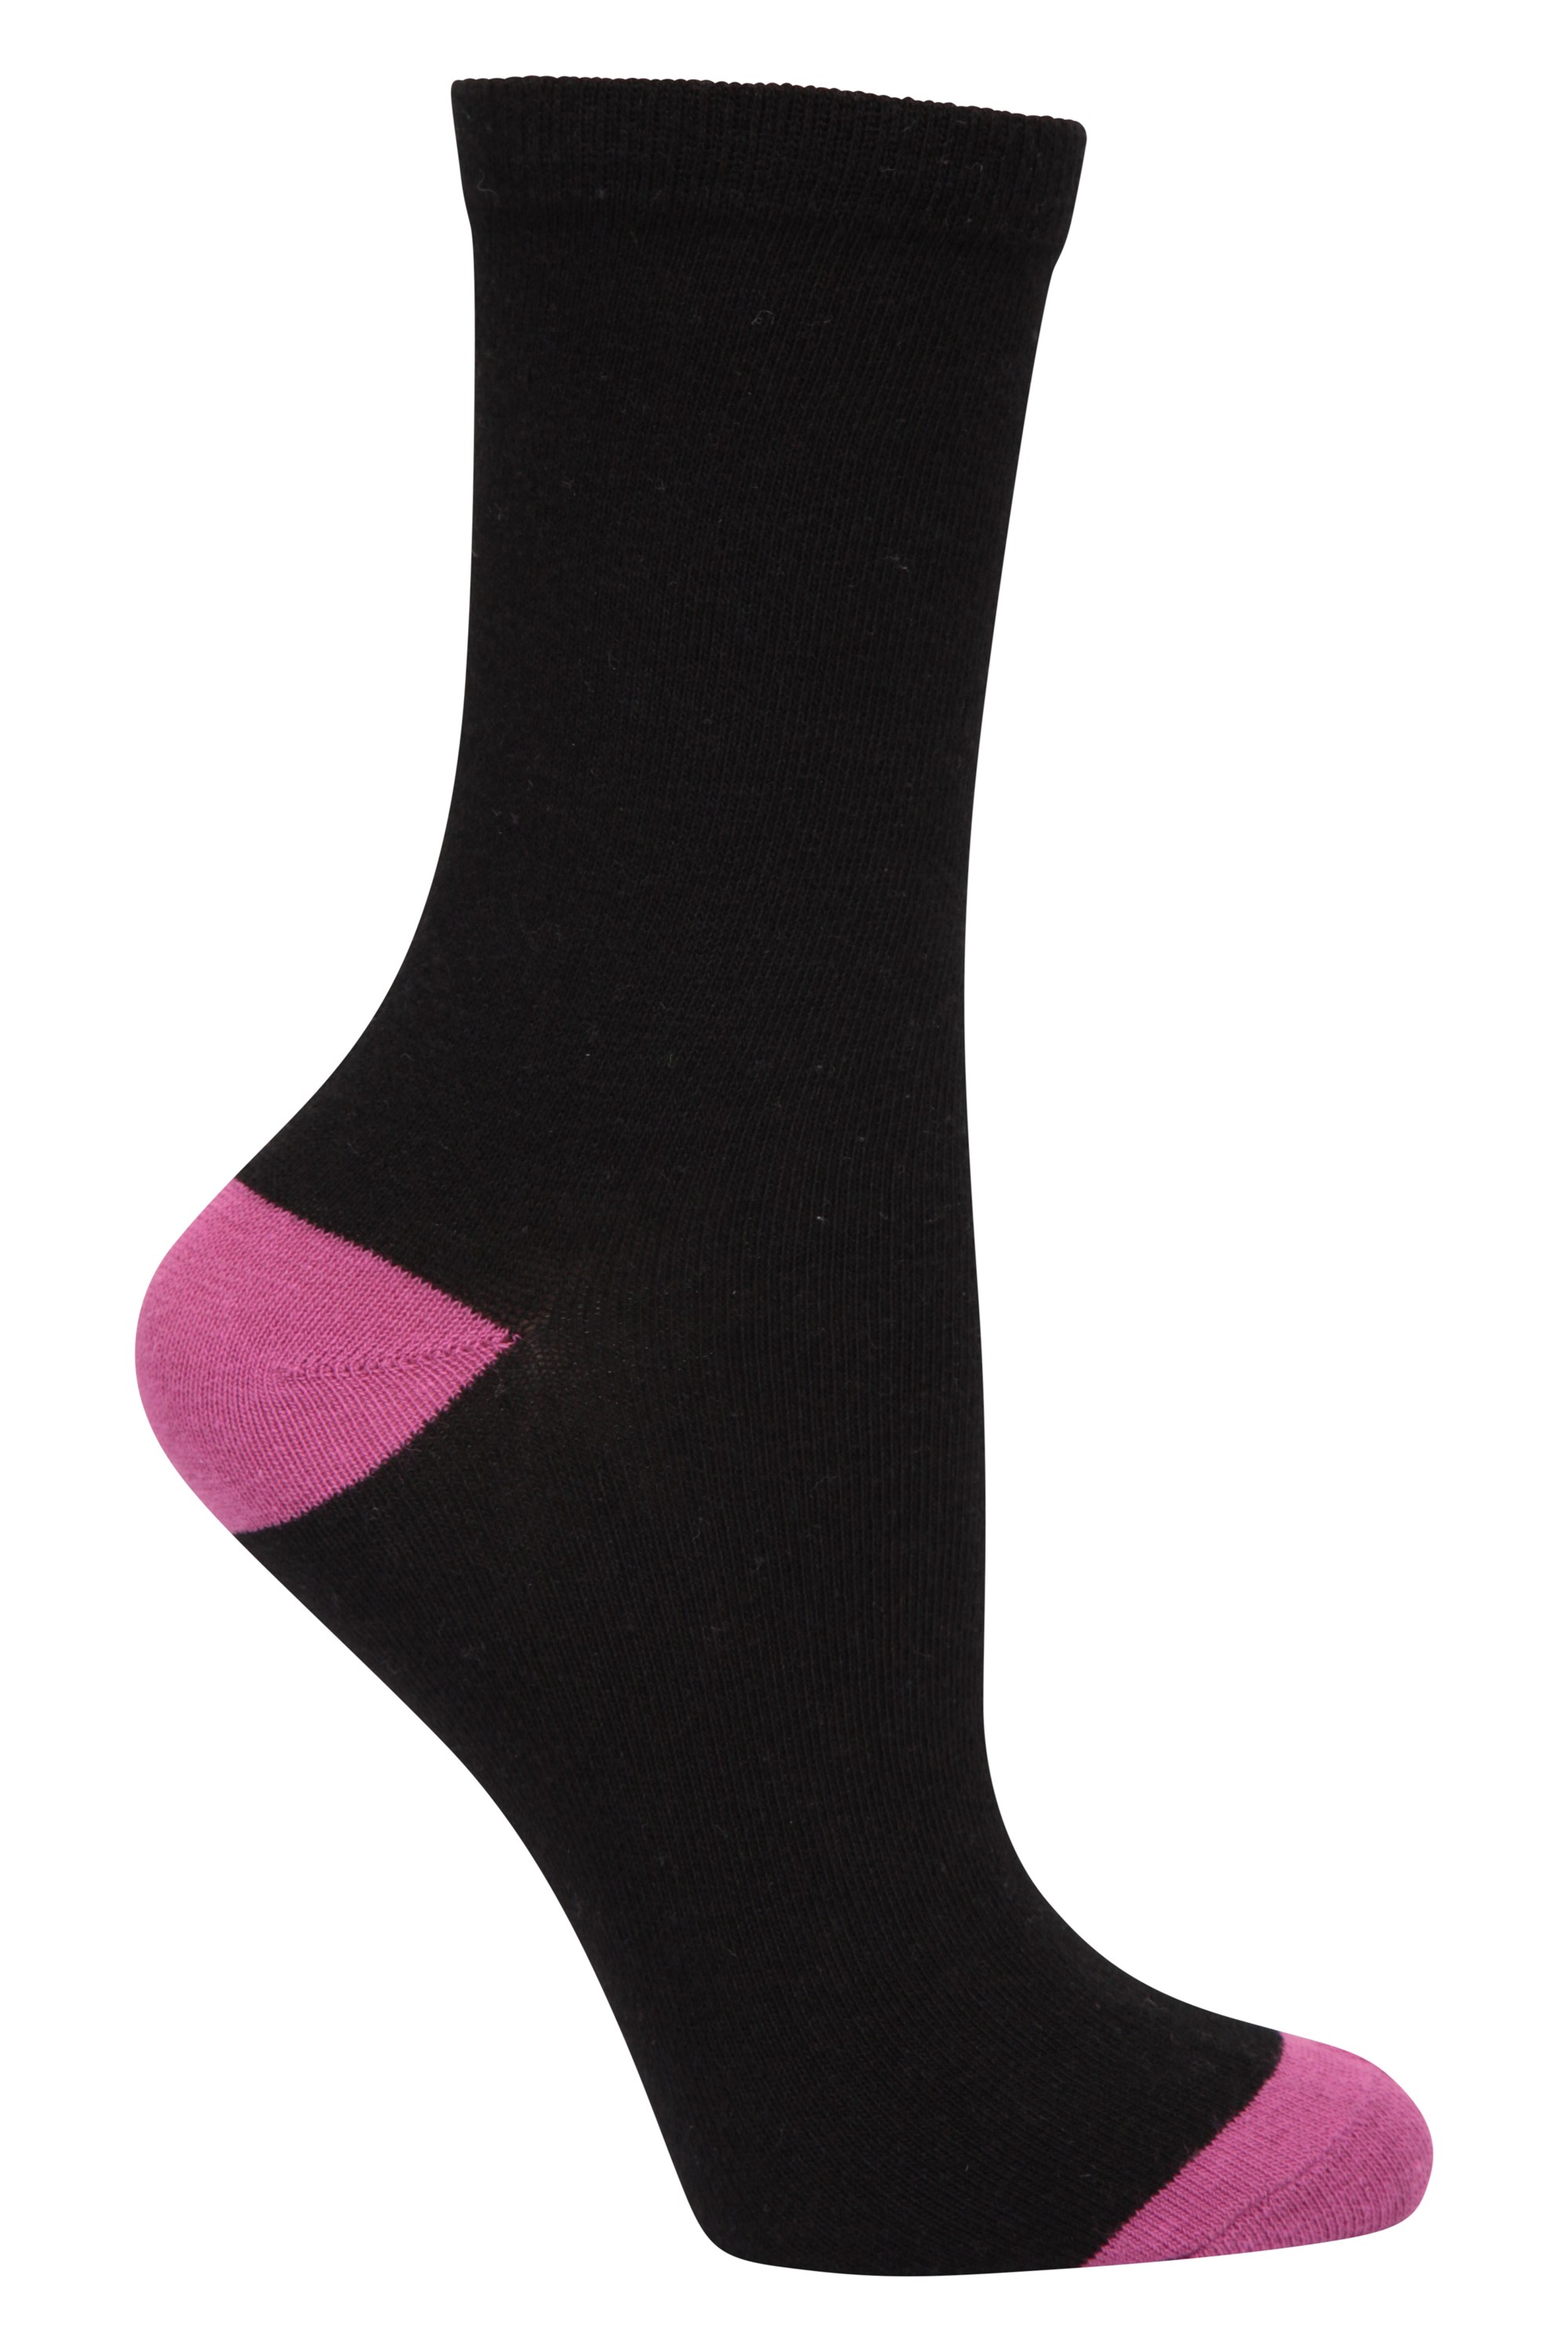 4-7 Mountain Warehouse Anti-Pill  Womens Black Everyday Sock 5Pk In Black 